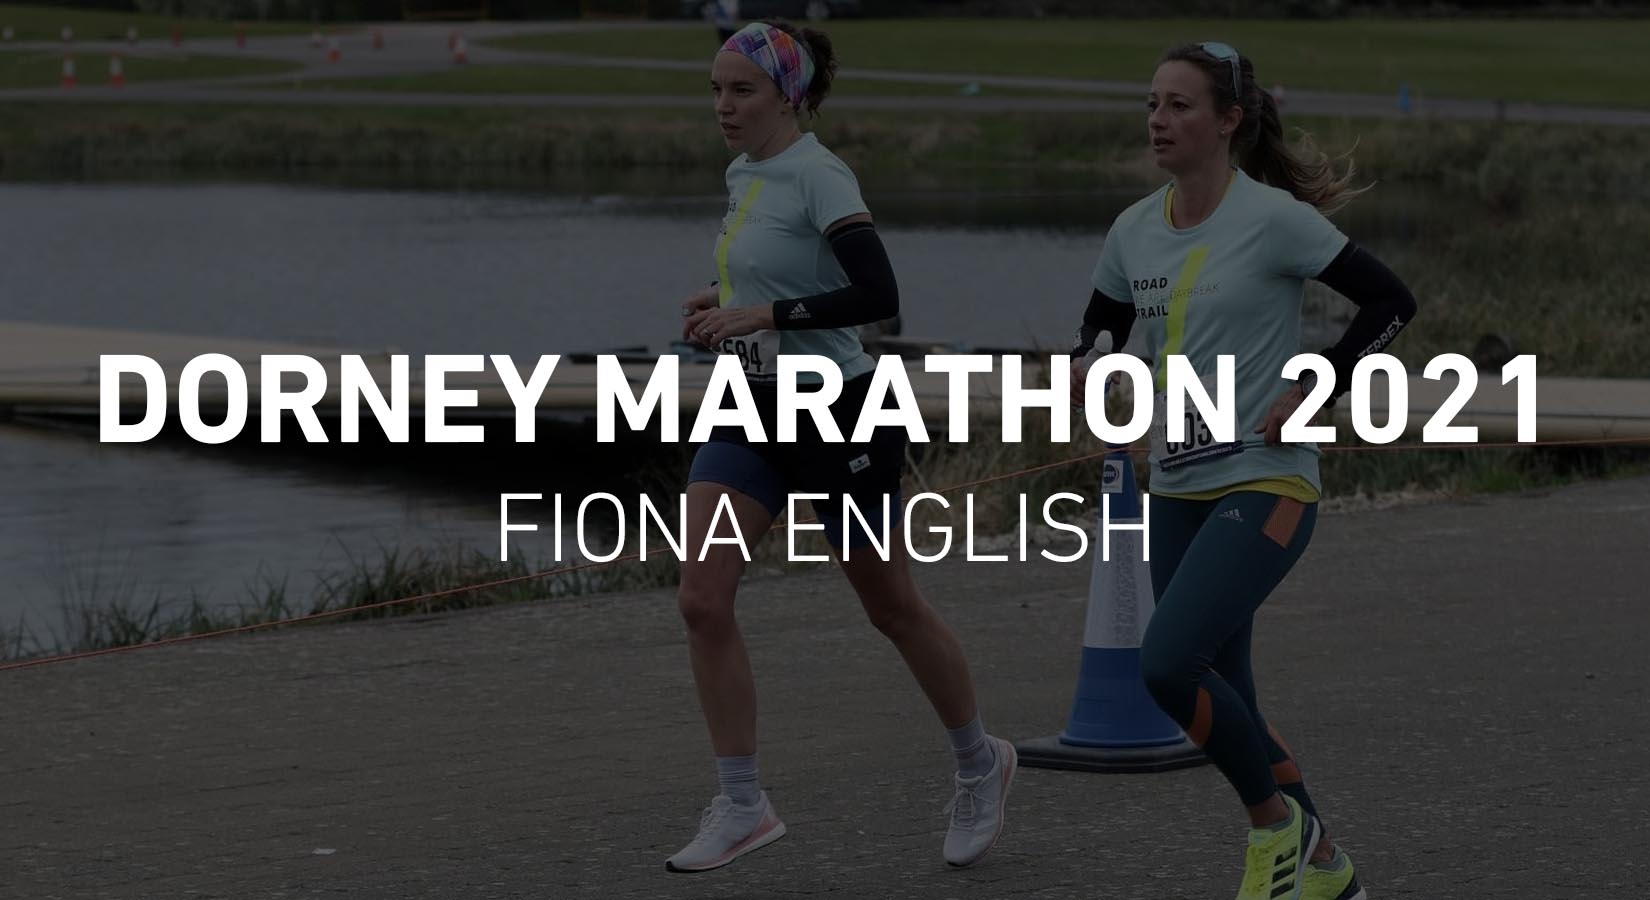 Dorney Marathon